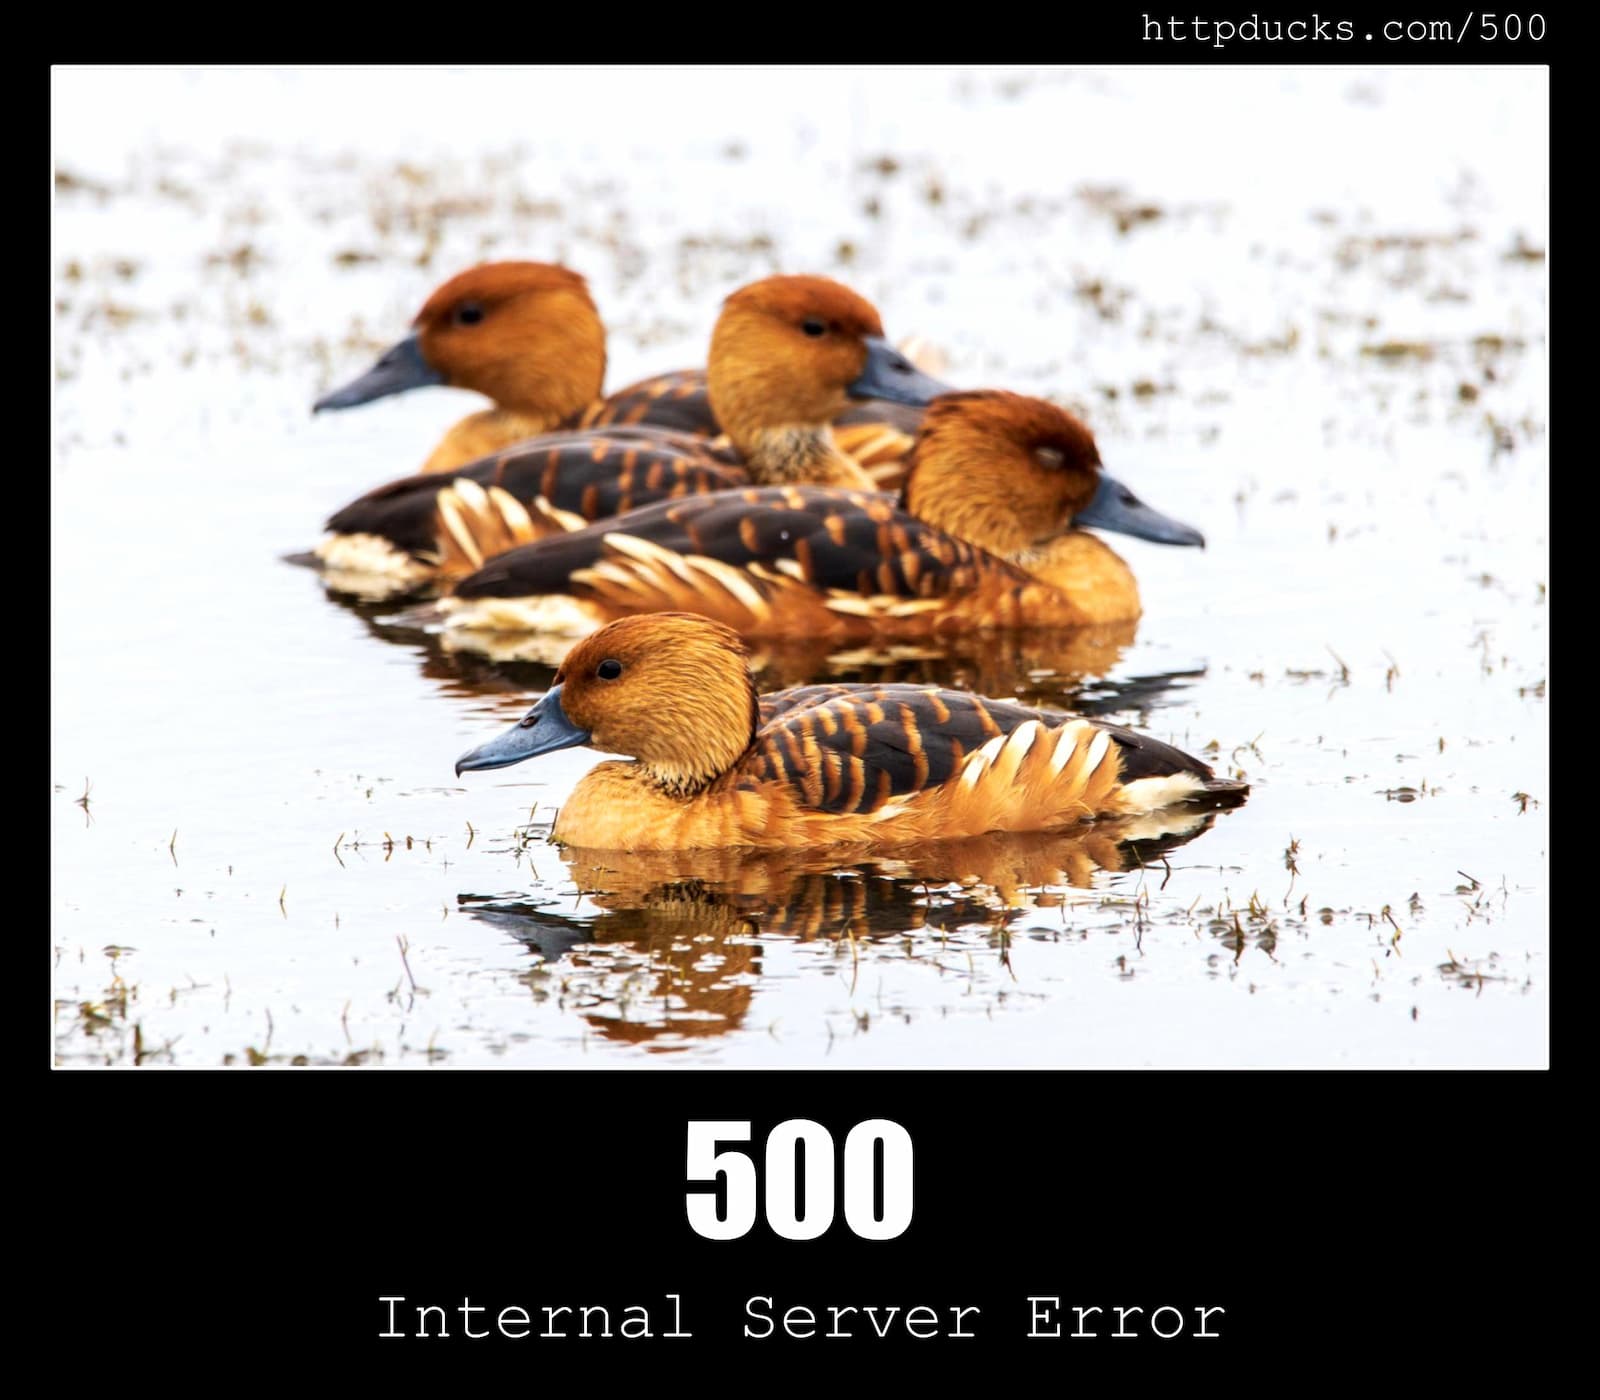 HTTP Status Code 500 Internal Server Error & Ducks